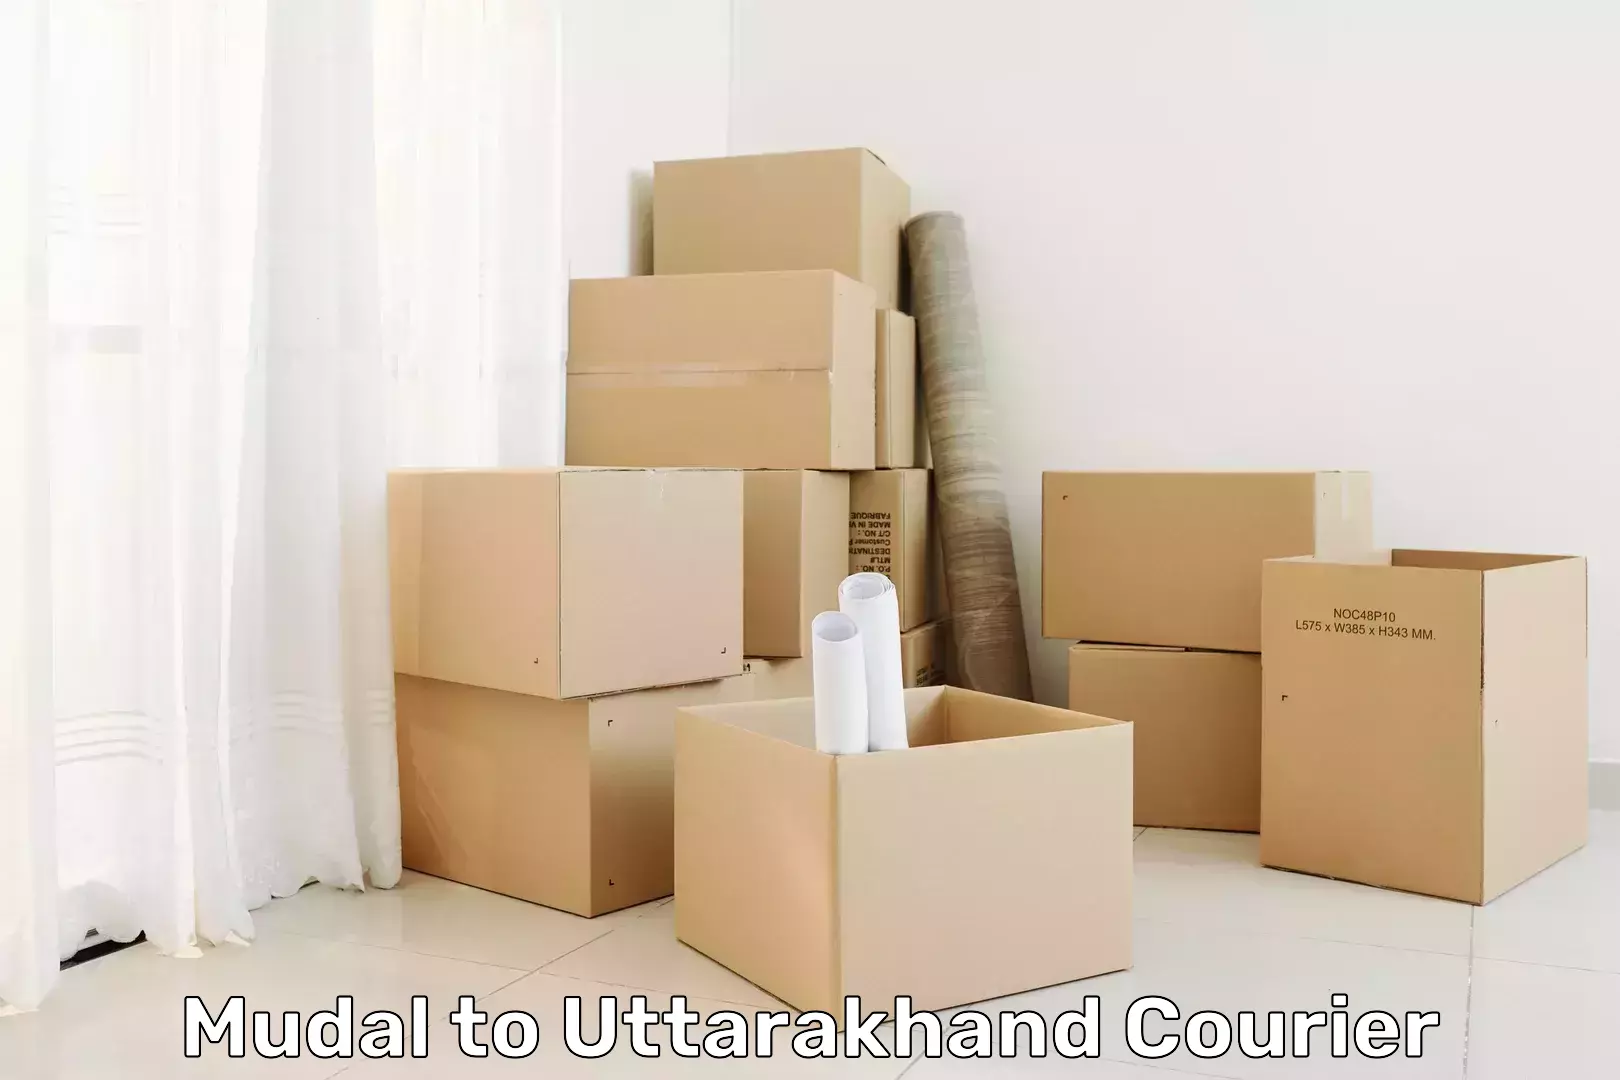 Efficient order fulfillment Mudal to Uttarakhand